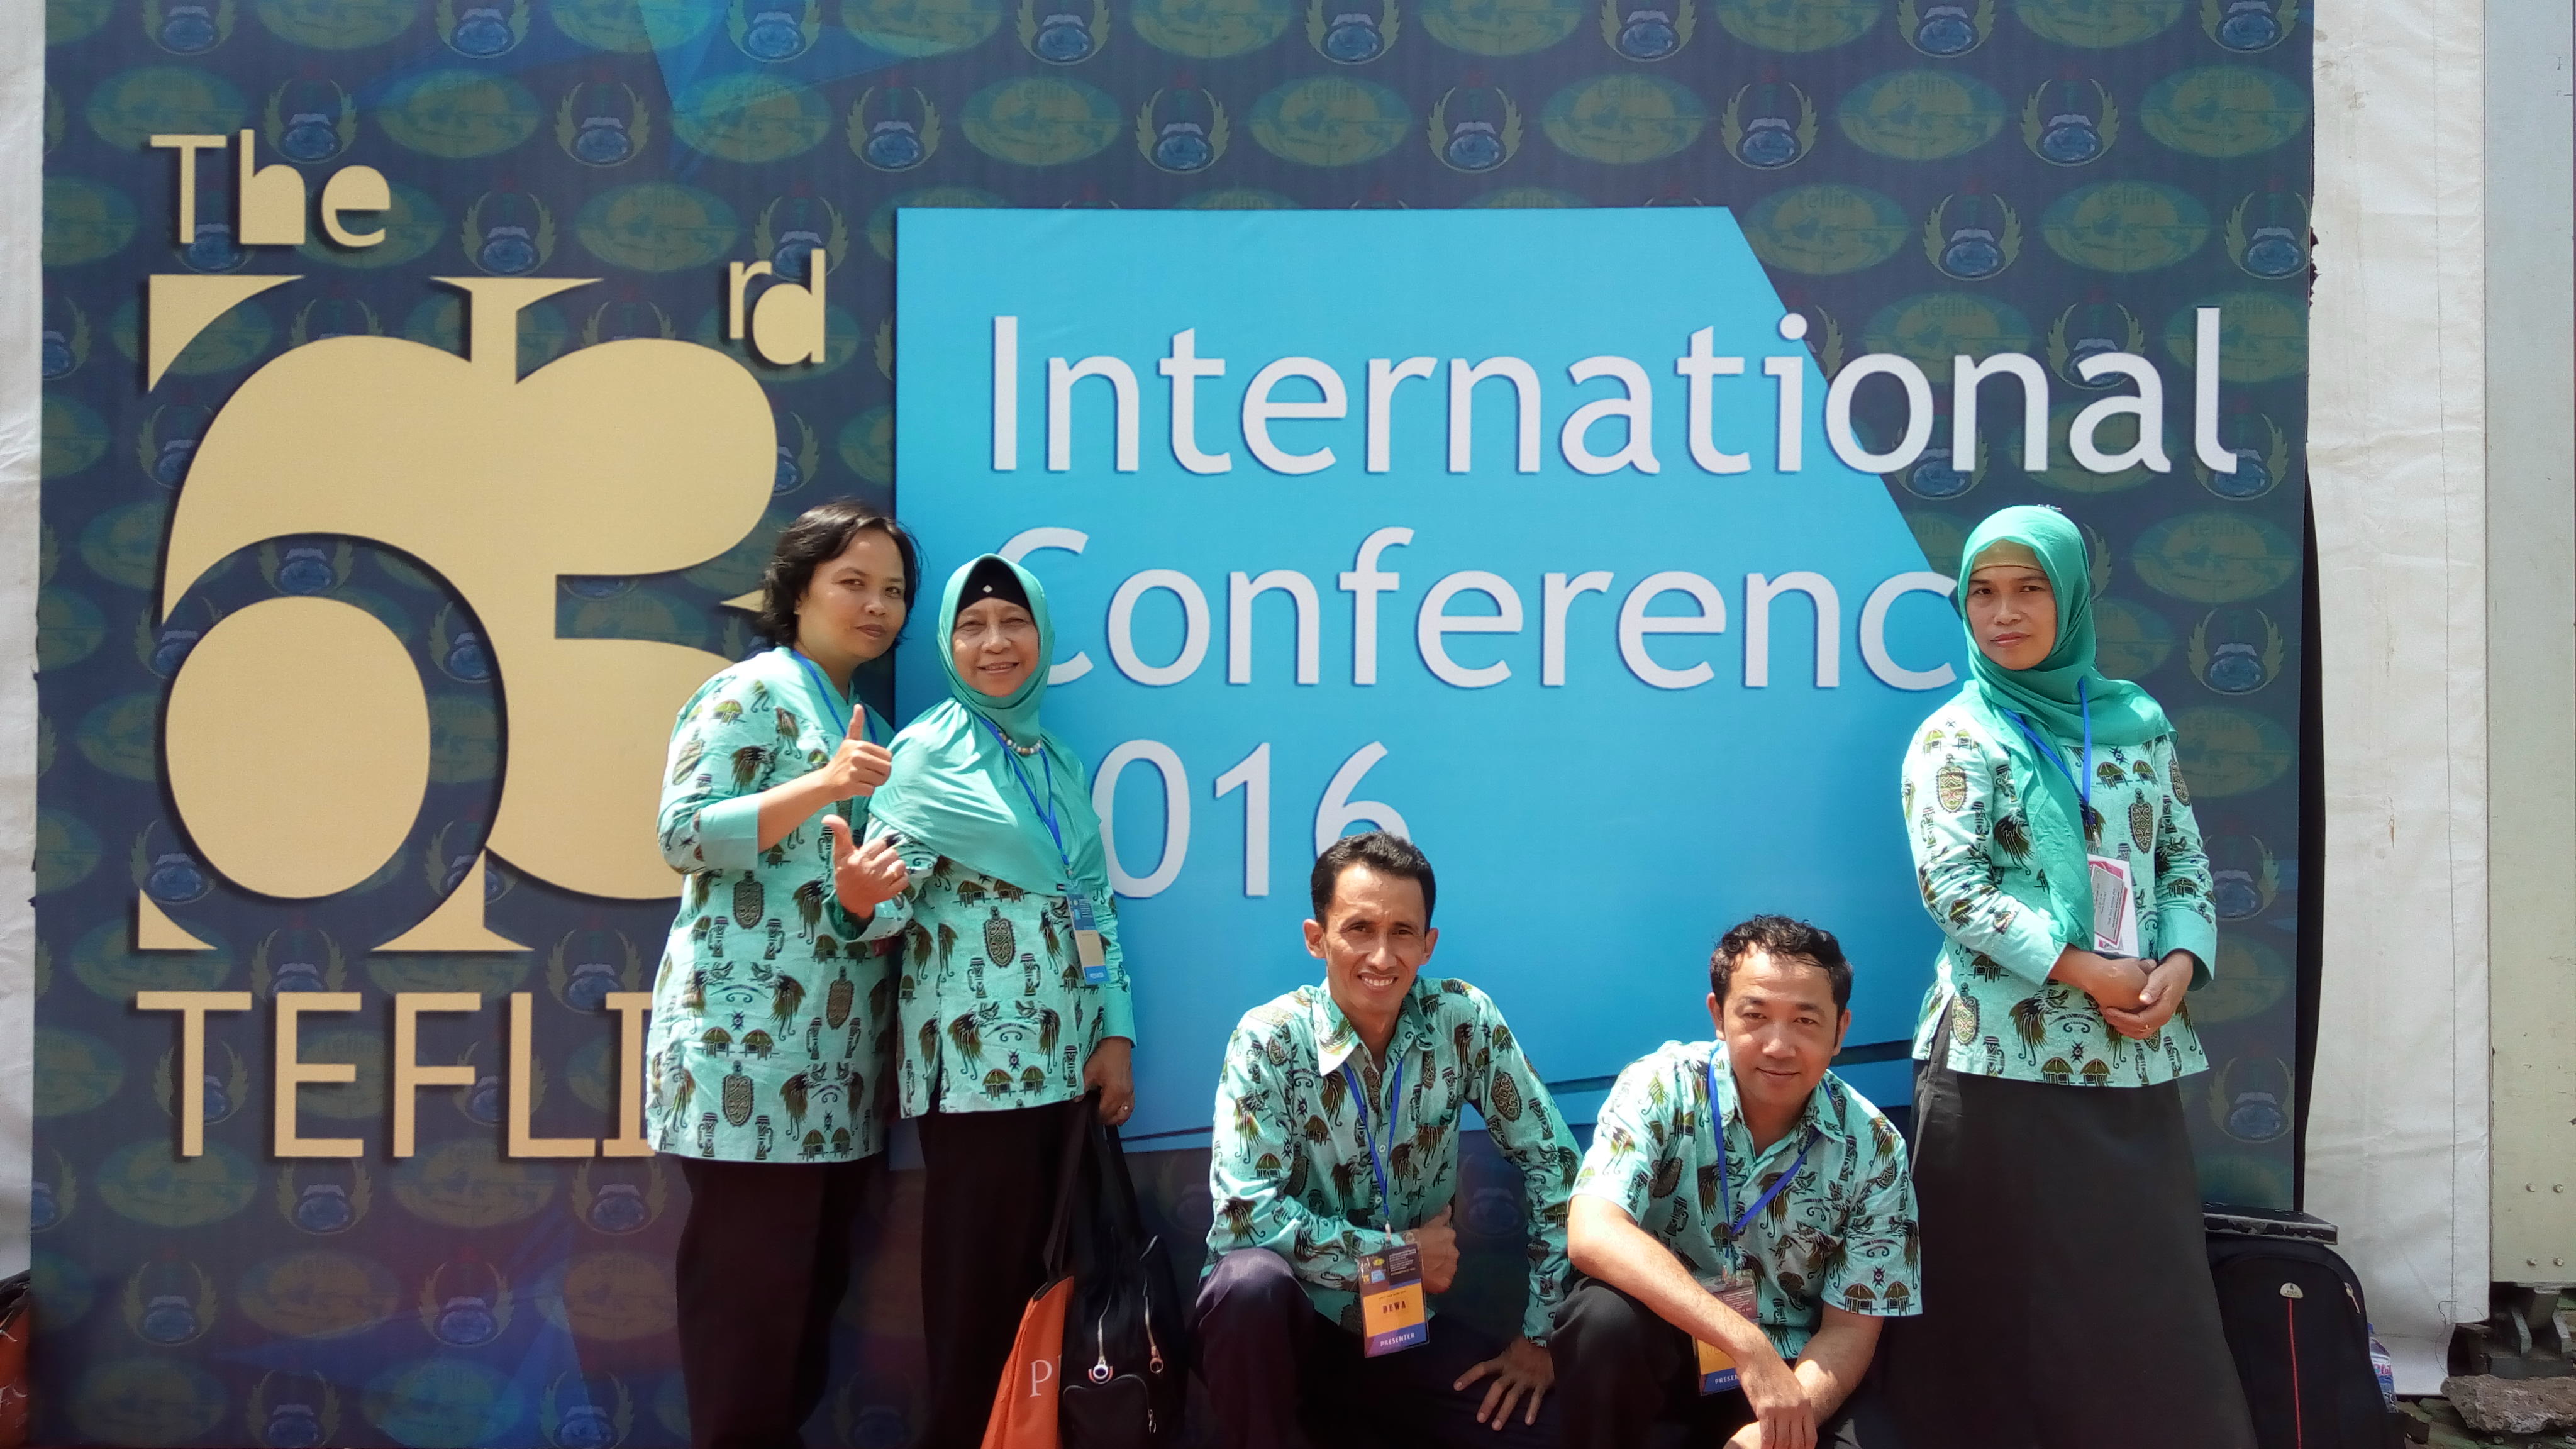                         
                                                
                                                
                                                
                        International Conference 2016<br>
                         
                      
                         
                      
                         
                      
                         
                      